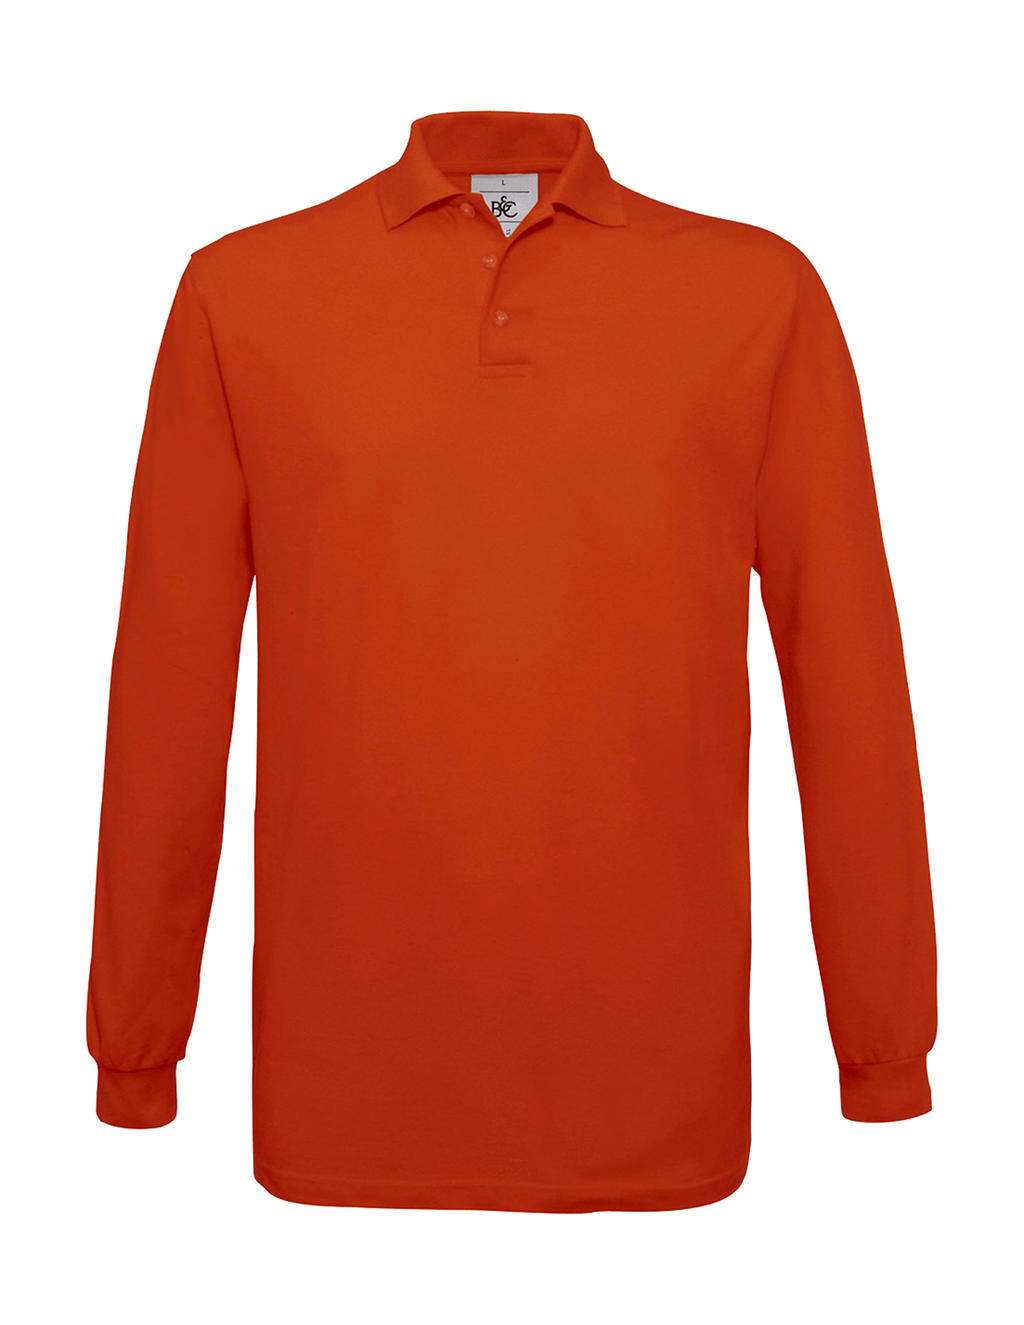 Pánské polo tričko B&C Safran s dlouhým rukávem - oranžové, M